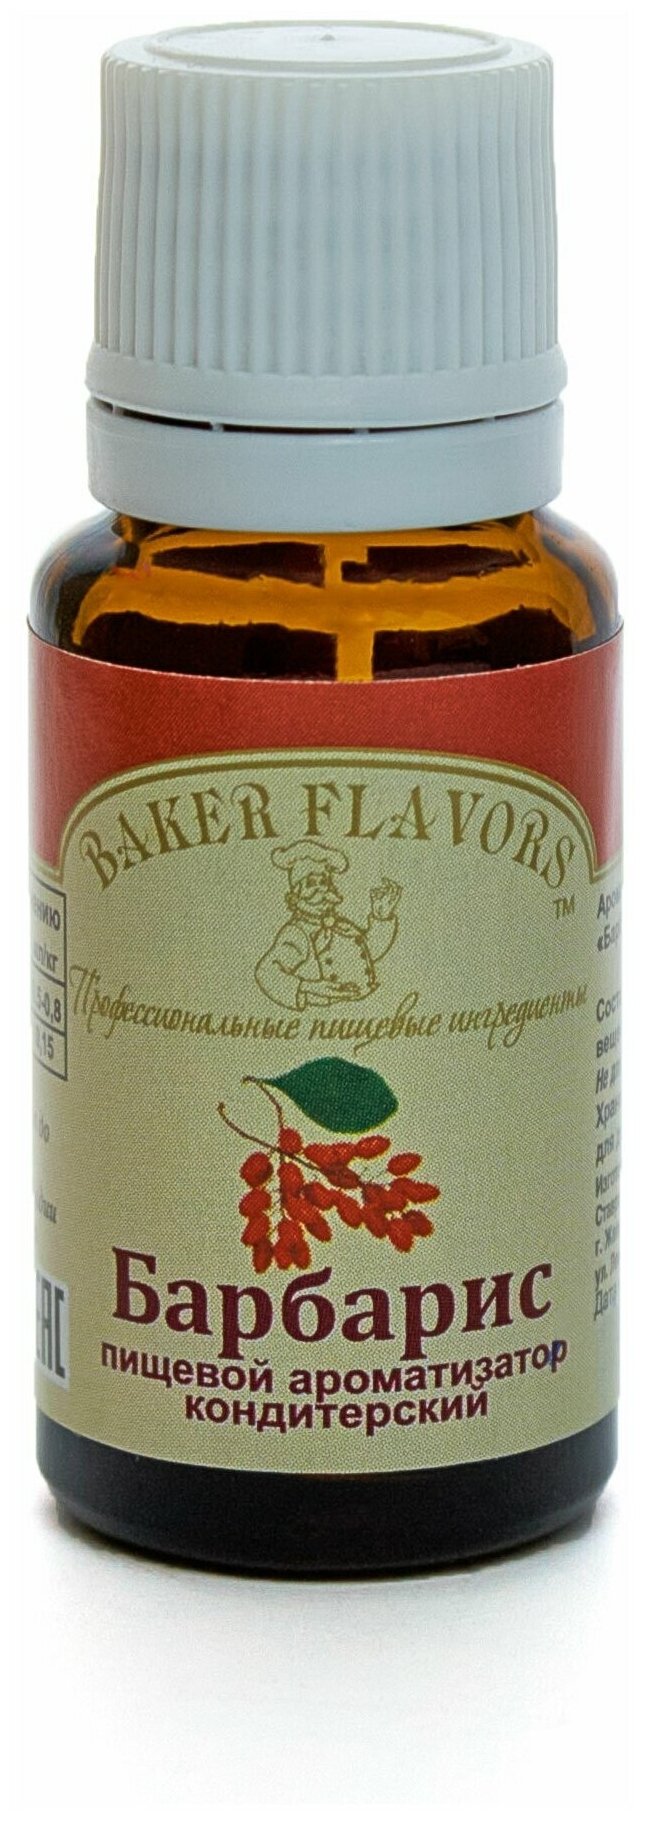 Пищевой ароматизатор Baker Flavors «Барбарис» 10 мл.